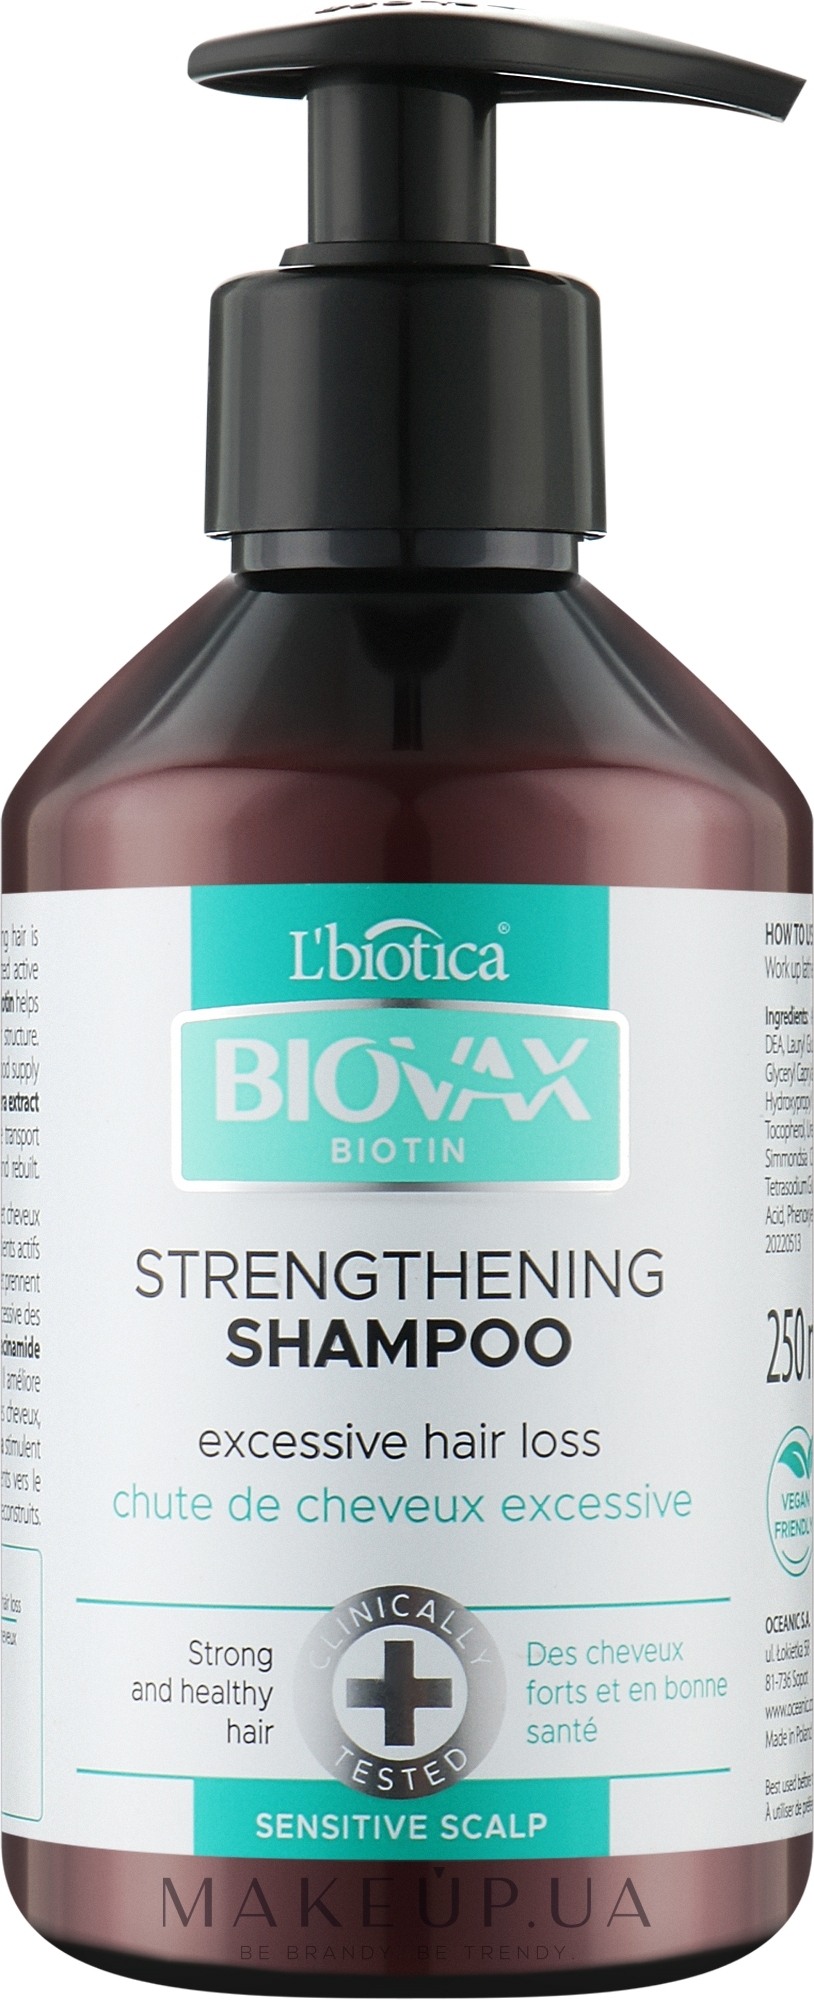 Стимулирующий укрепляющий шампунь для волос - Biovax Biotin Strengthening Shampoo — фото 250ml